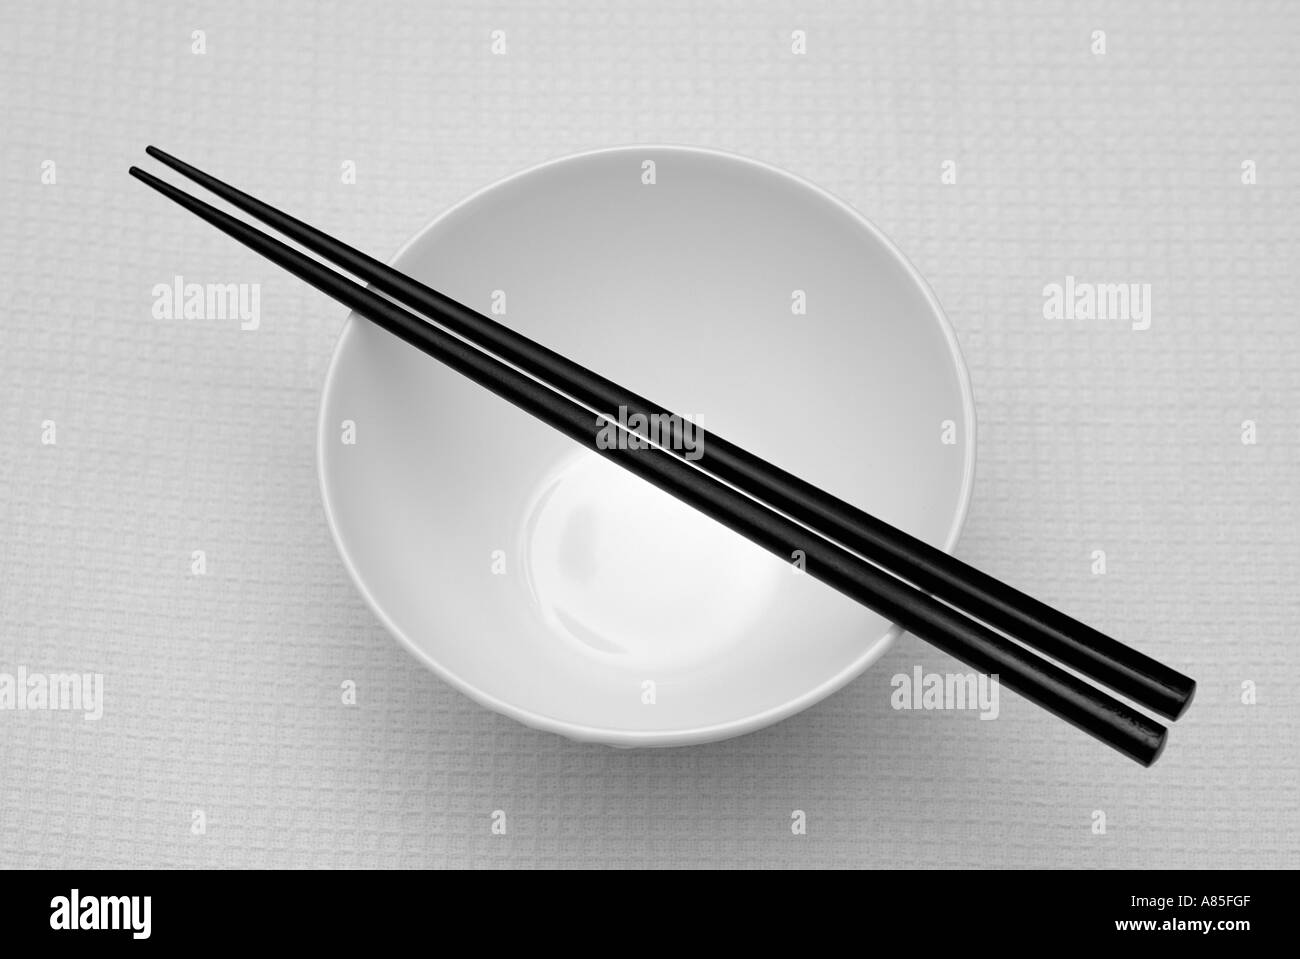 Chopsticks on an Empty Rice Bowl Stock Photo